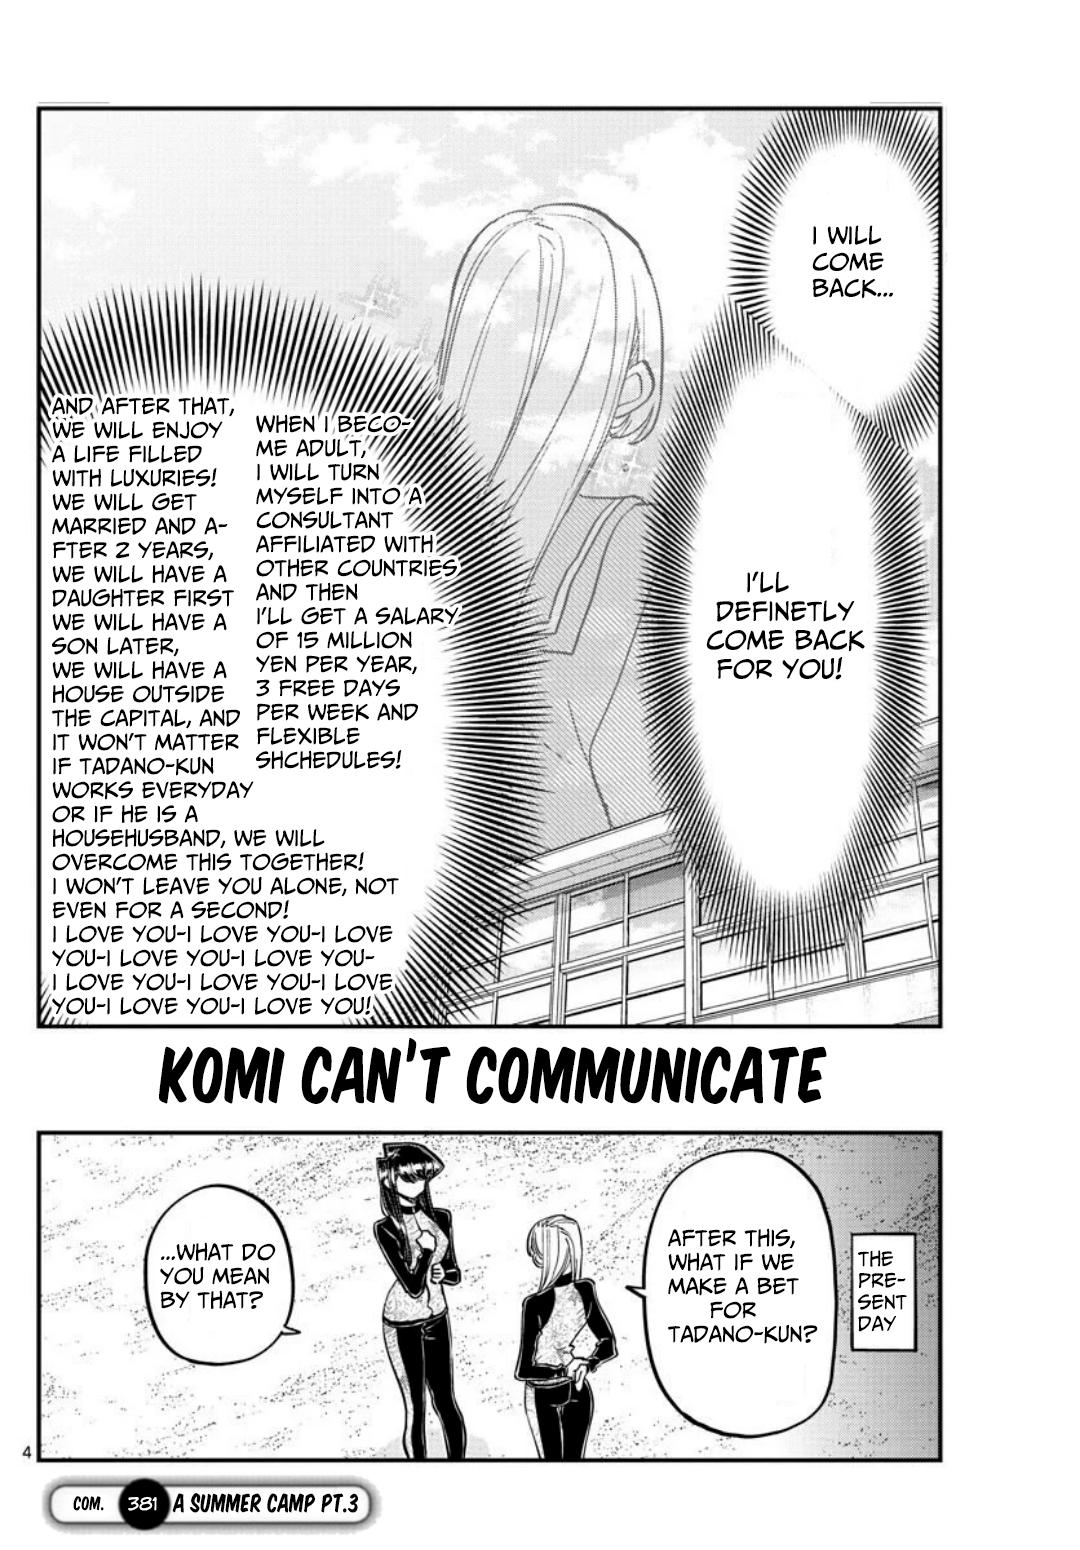 komi can't communicate chapter,komi san can't communicate chapter, komi can't communicate,komi can't communicate manga,komi can't communicate manga online,komi san can't communicate,komi san can't communicate manga,komi san can't communicate manga online,komi san chapter, komi can't communicate anime,komi can't communicate vol 1,komi can't communicate volume 1,komi can't communicate read online,komi can't communicate volume 2,komi can't communicate vol 2